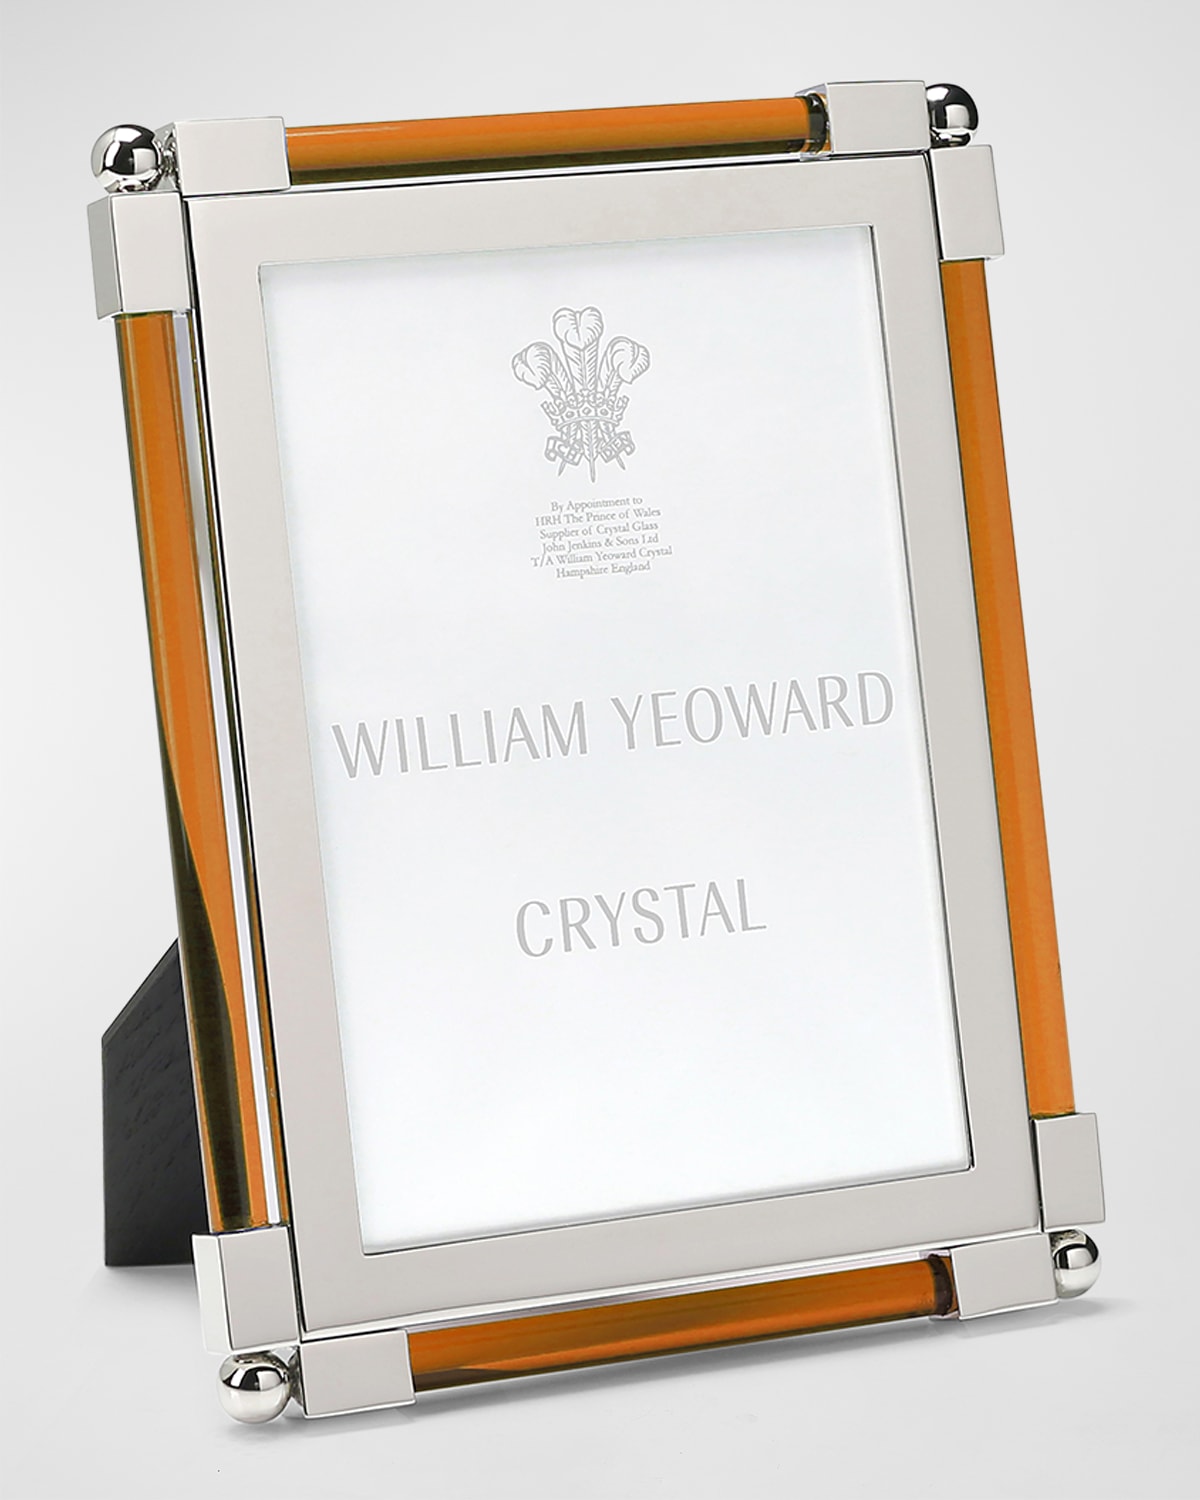 WILLIAM YEOWARD CRYSTAL NEW CLASSIC AMBER FRAME, 5 X 7